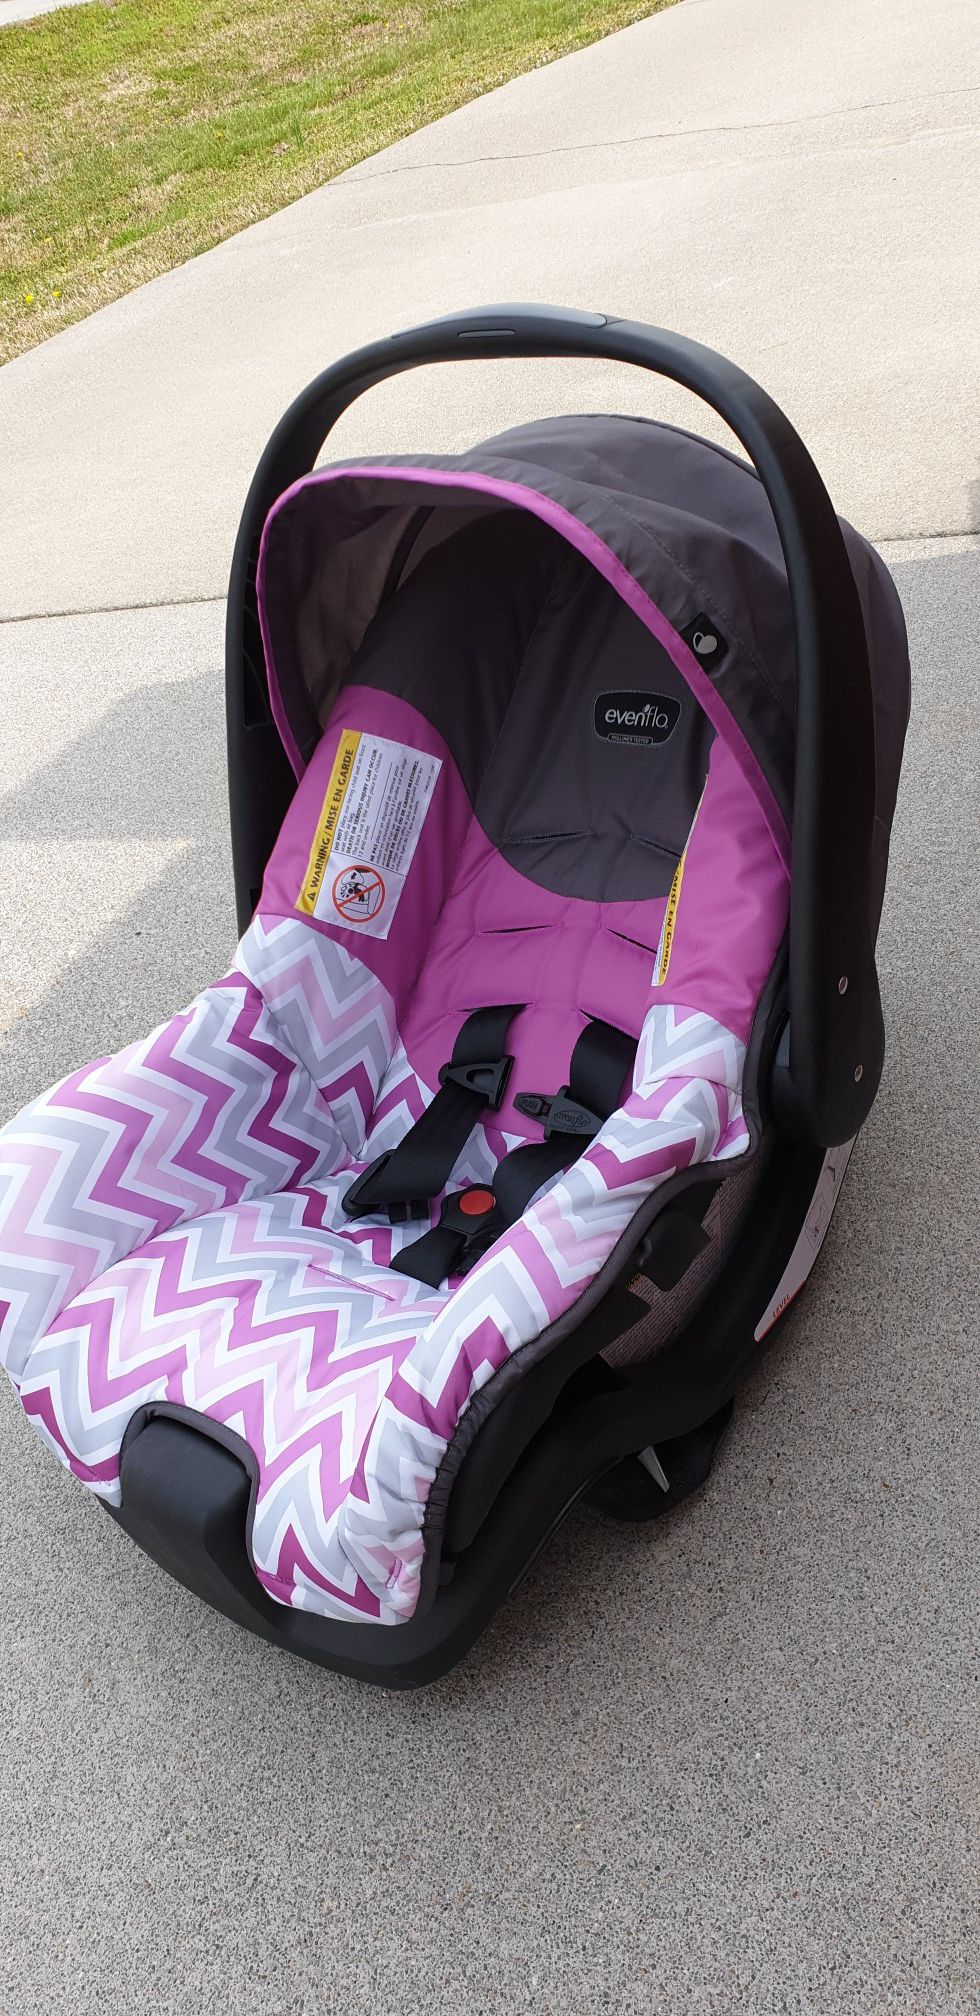 New Evenflo infant car seat.